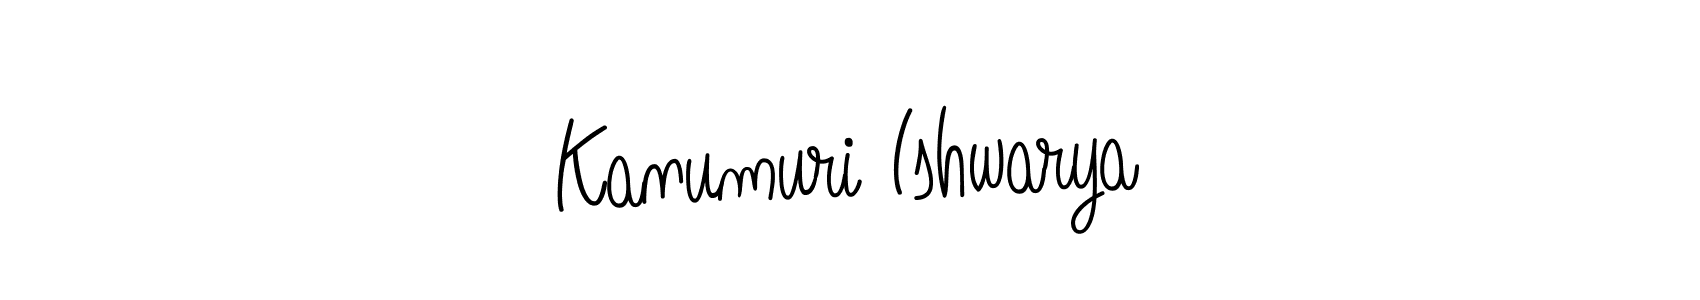 How to Draw Kanumuri Ishwarya signature style? Angelique-Rose-font-FFP is a latest design signature styles for name Kanumuri Ishwarya. Kanumuri Ishwarya signature style 5 images and pictures png